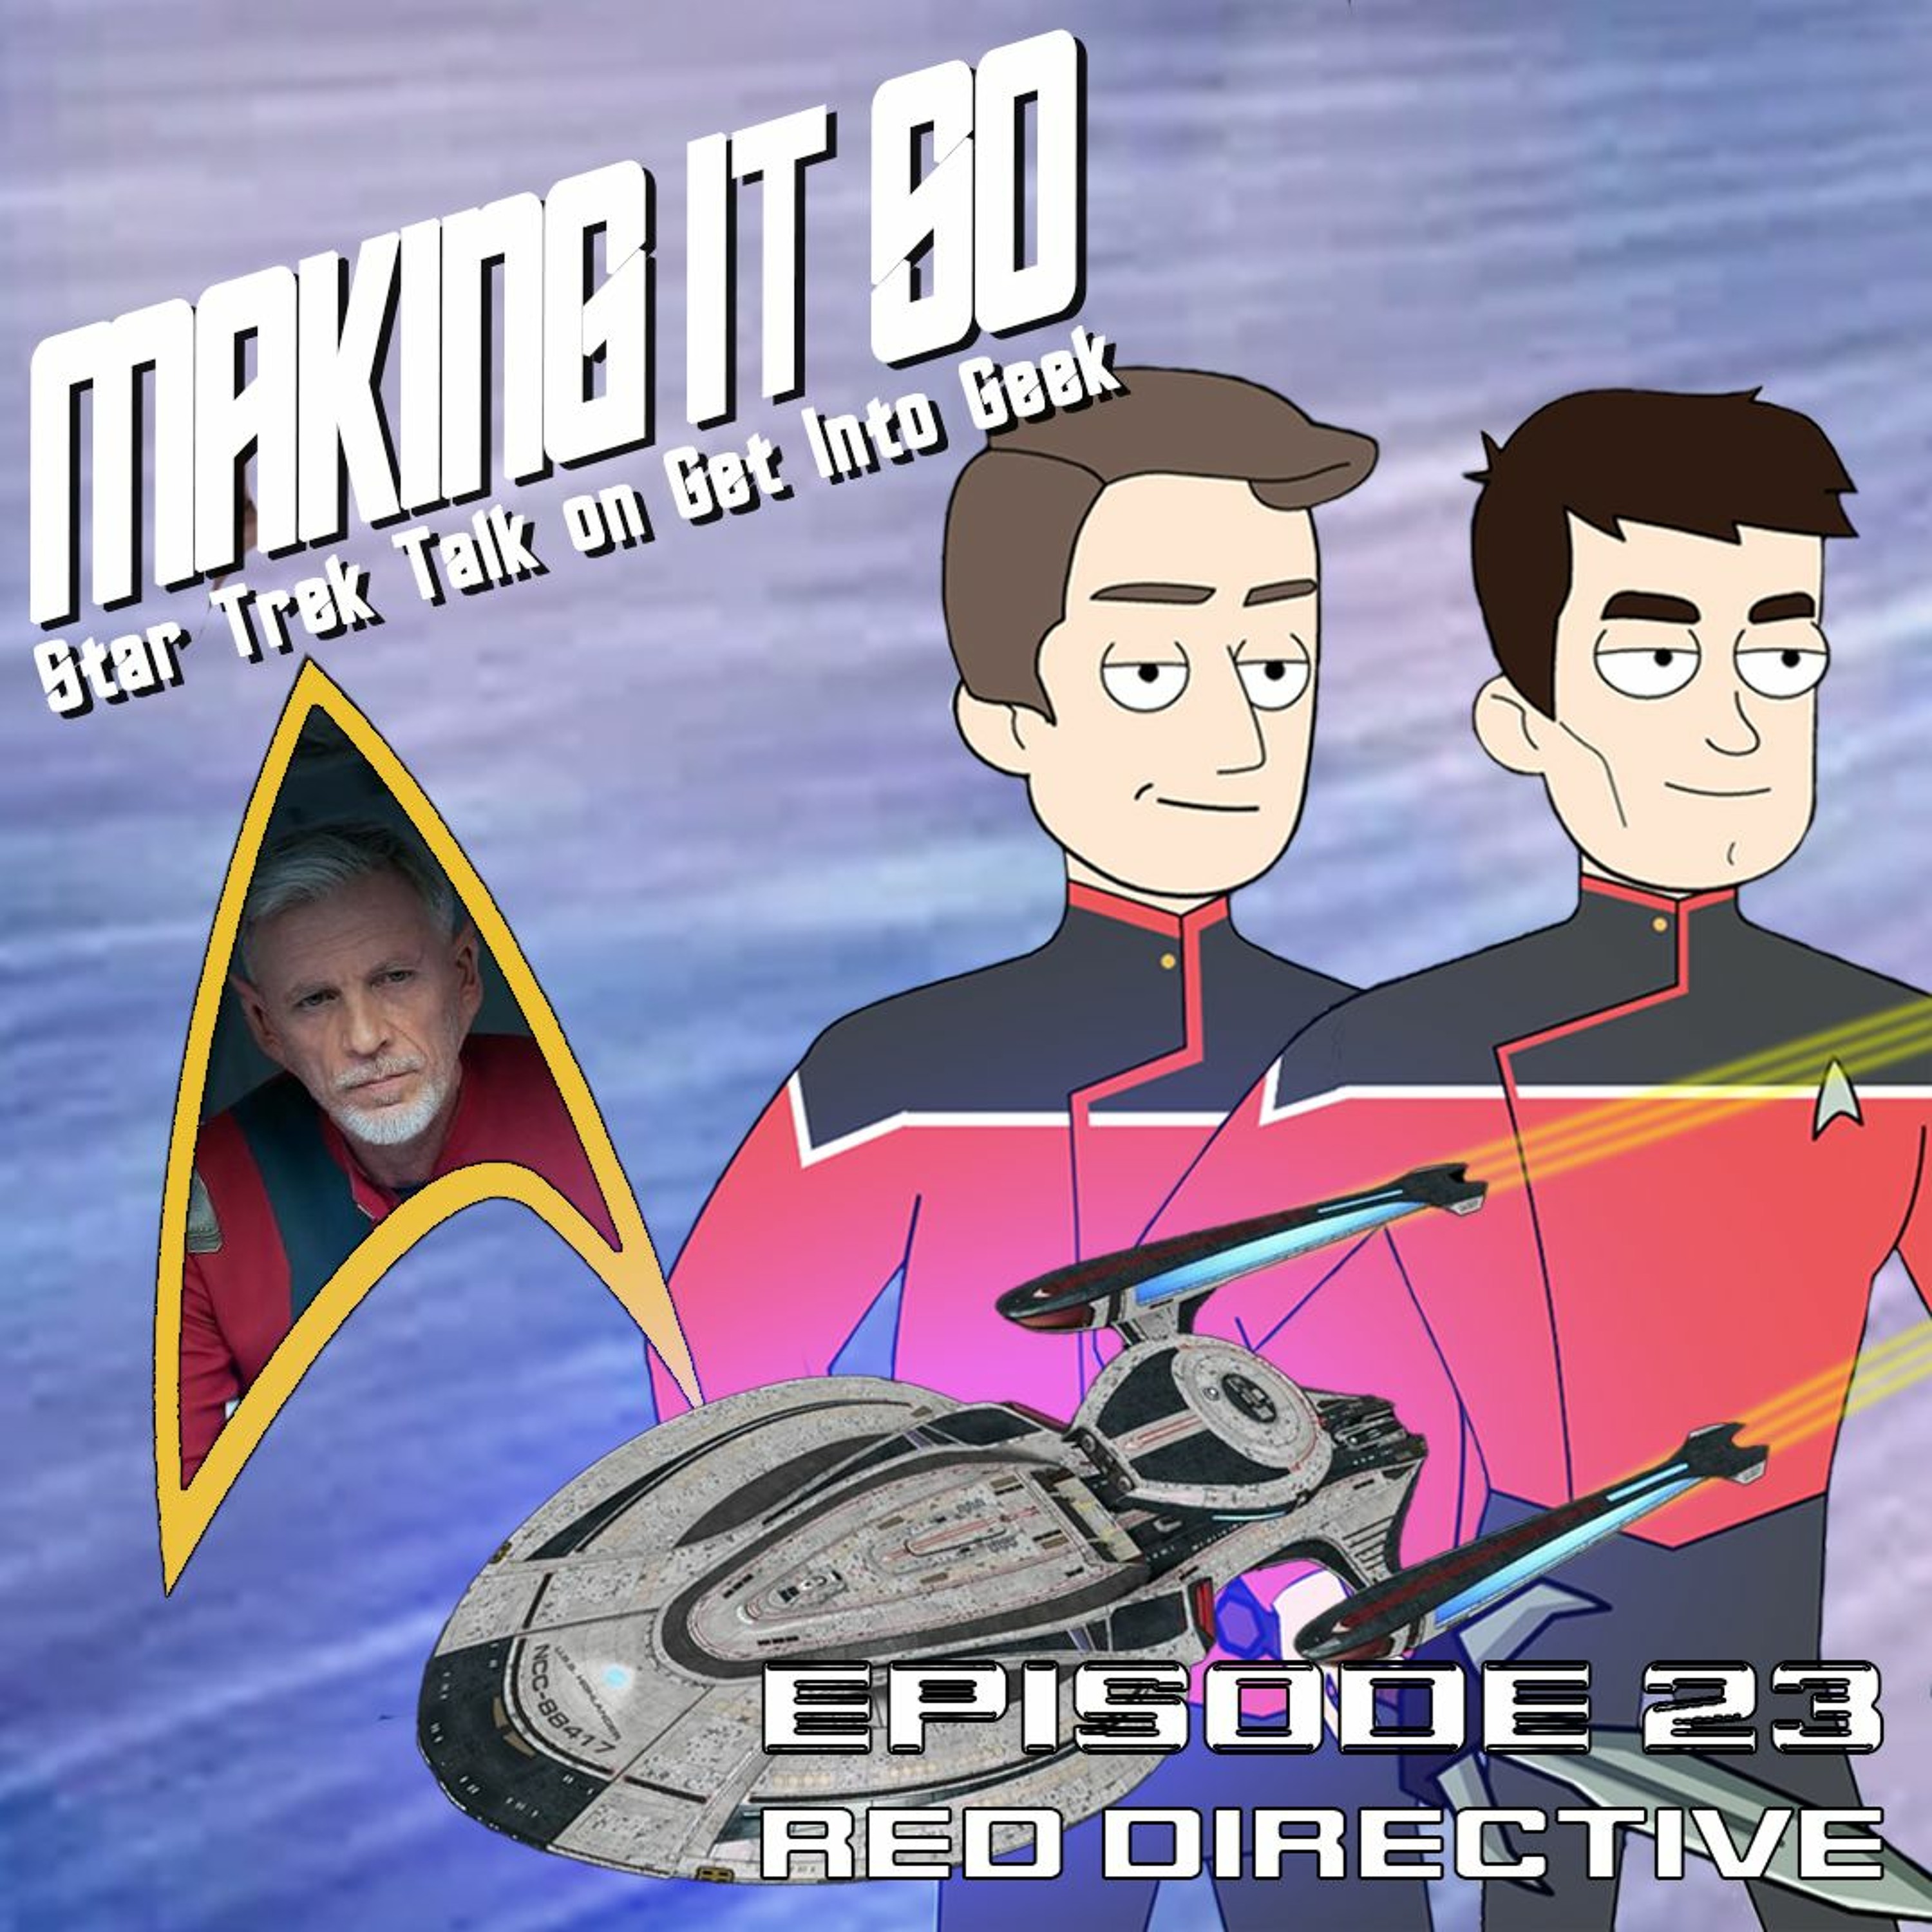 Discovery Returns! AKA Red Directive (Making It So - Star Trek Talk Episode 23)